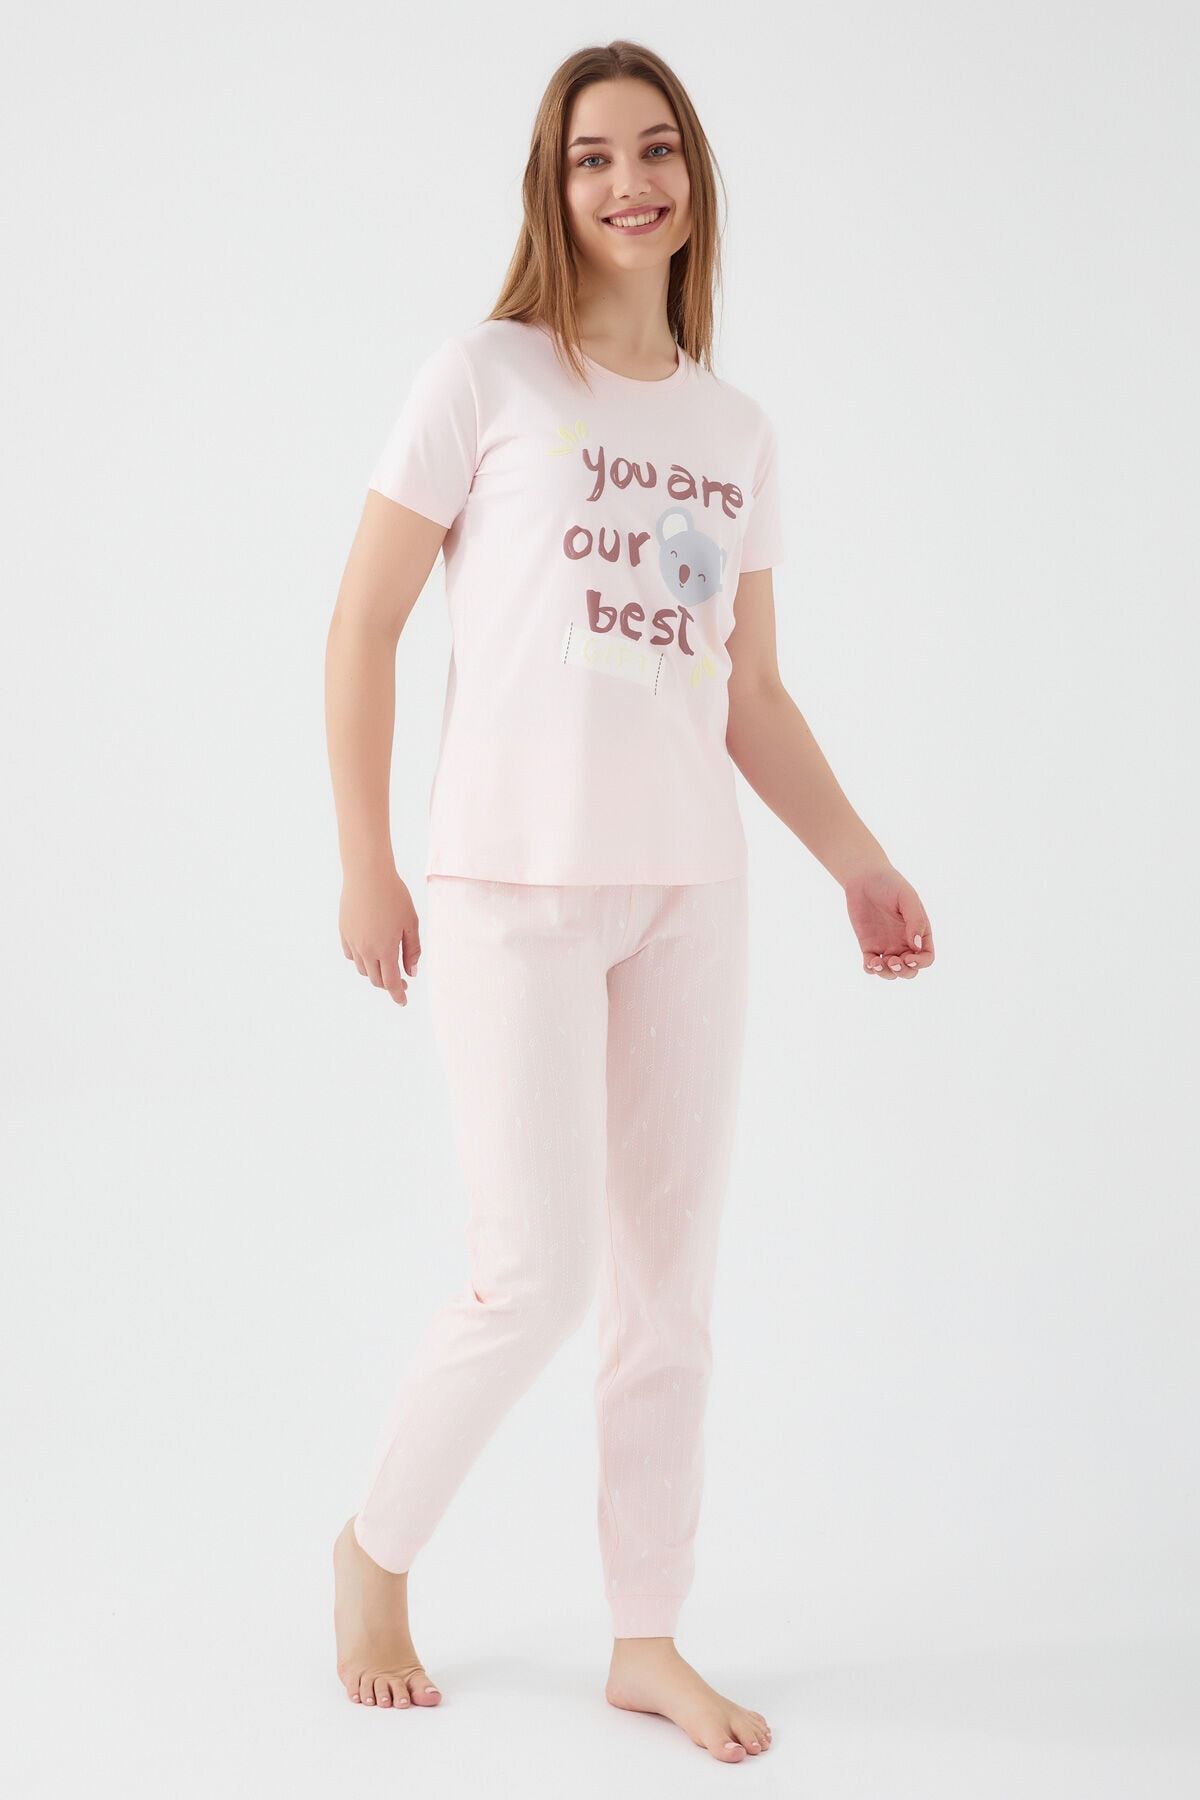 Rolypoly Rolypoly Best Giftaçık Turuncu Kız Çocuk Kısa Kol Pijama Takım